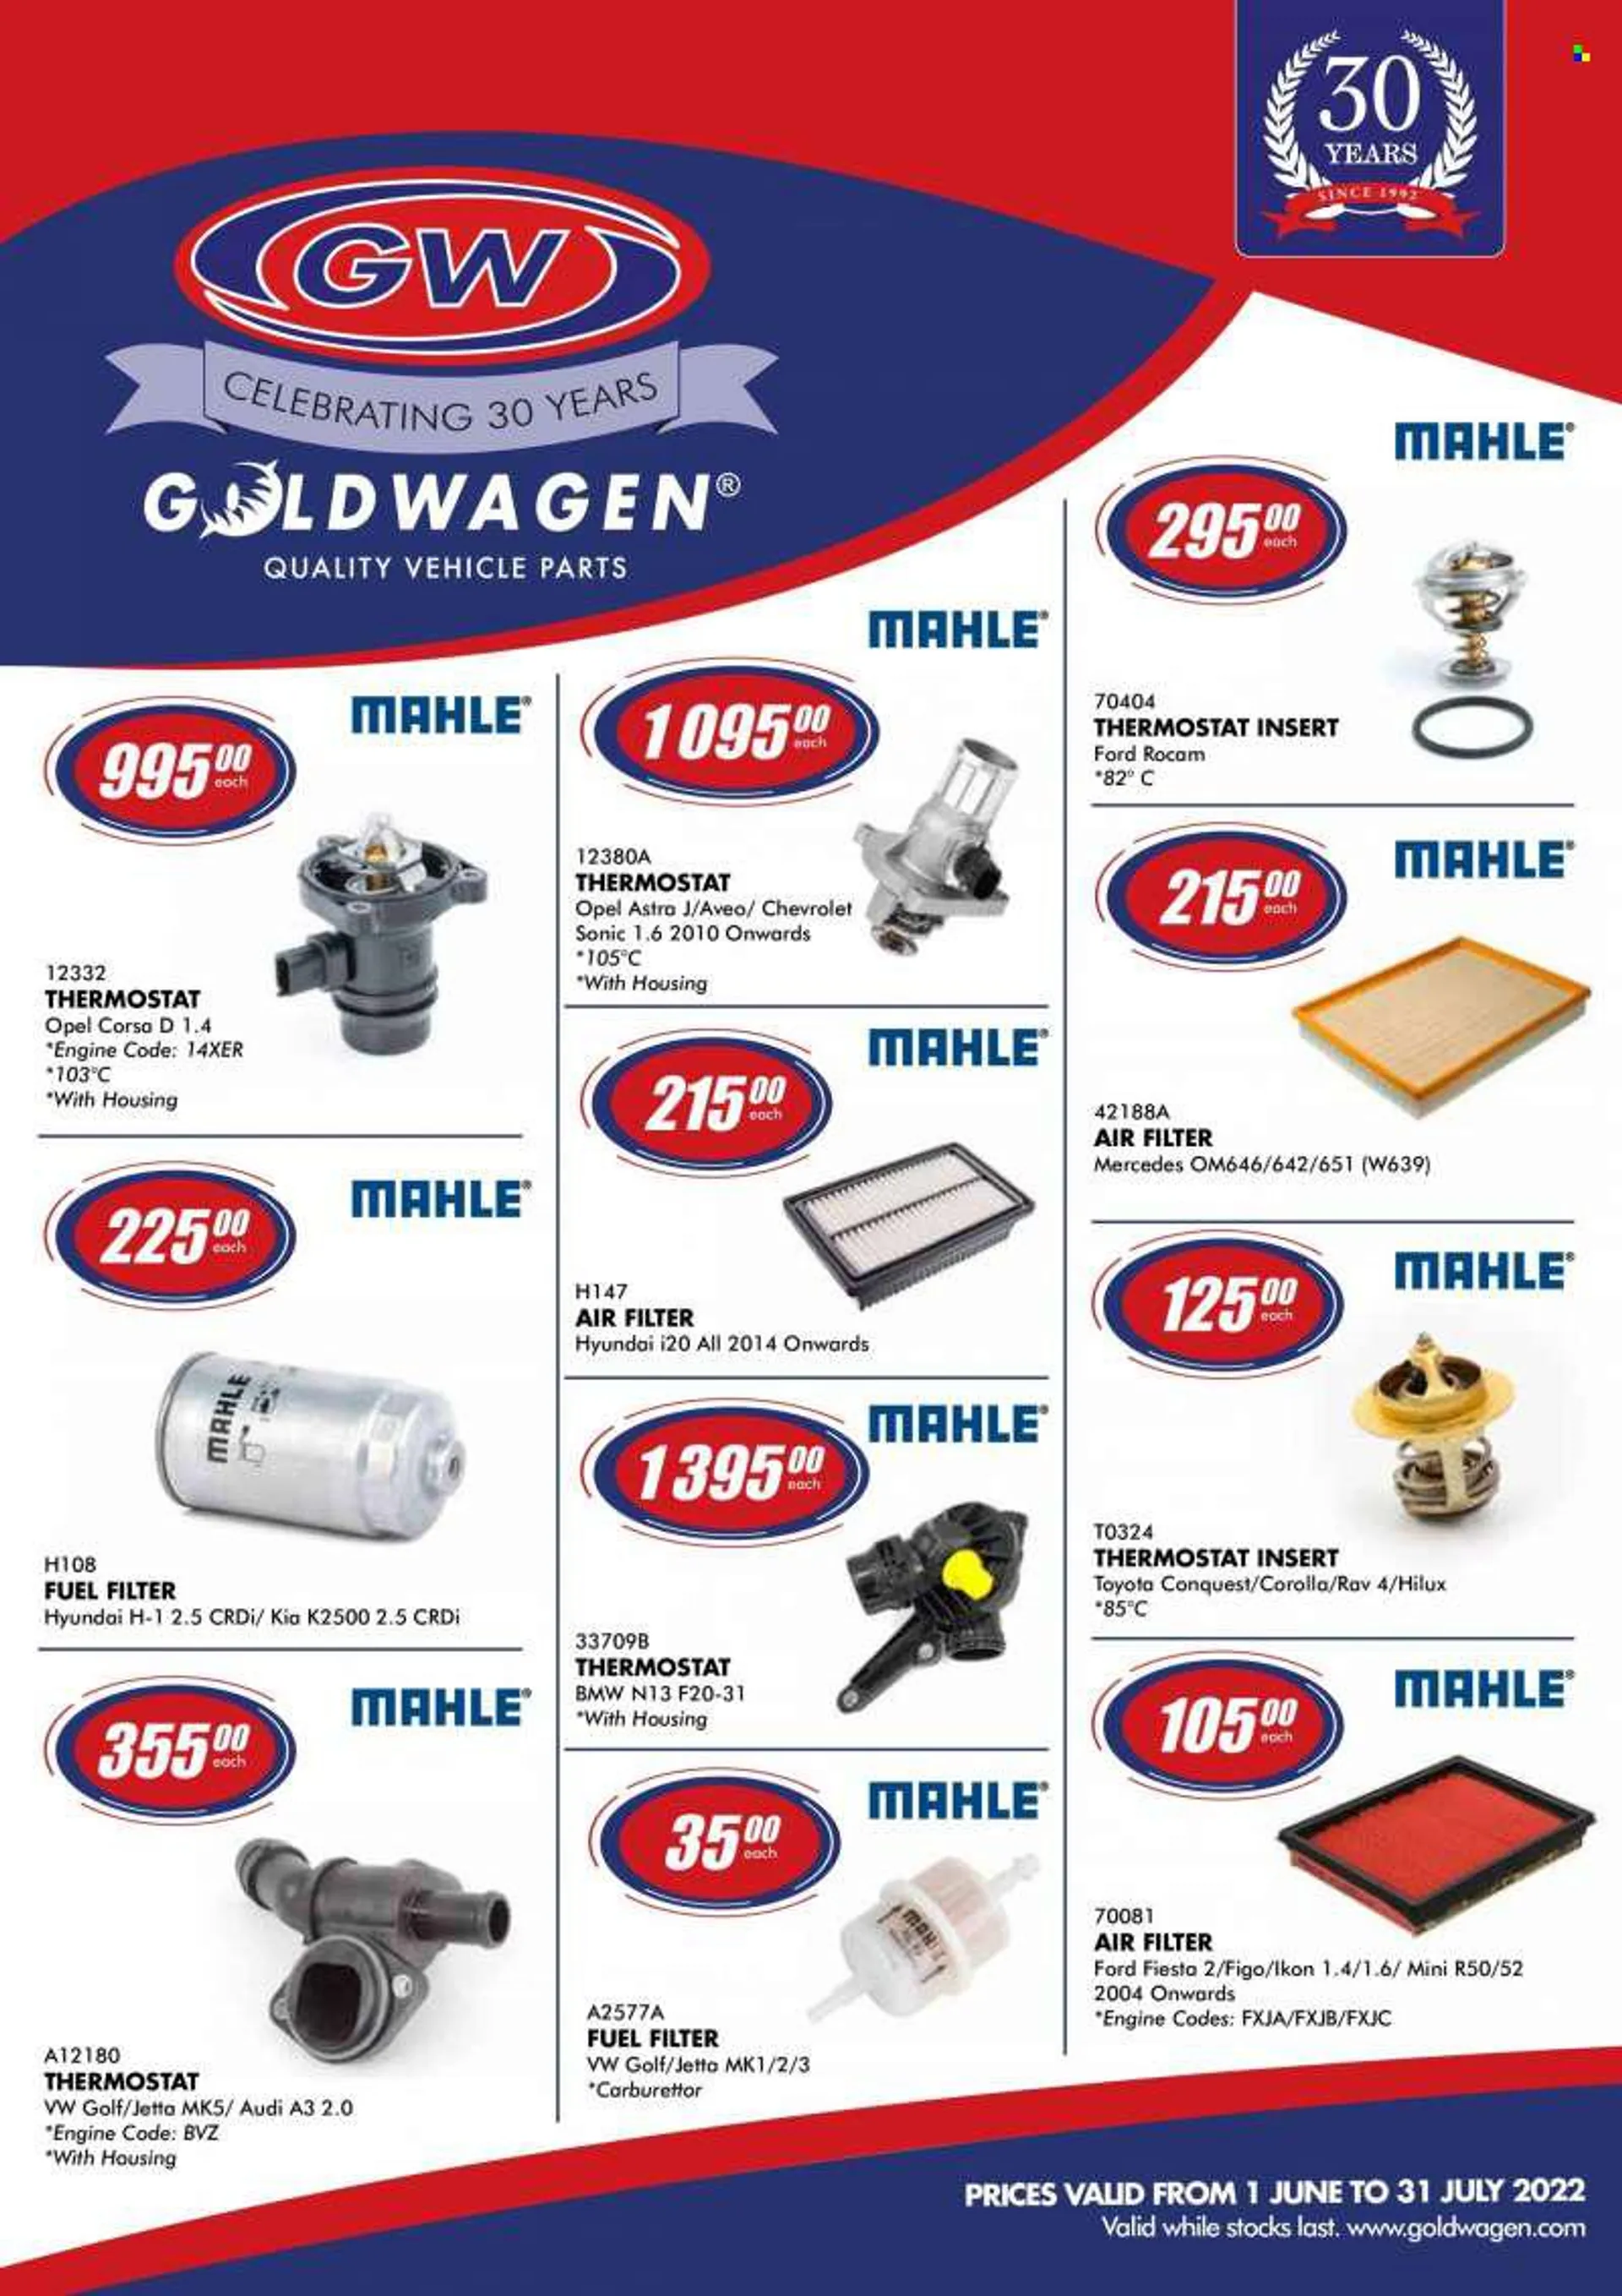 Goldwagen catalogue  - 01/06/2022 - 31/07/2022. - 1 June 31 July 2022 - Page 1